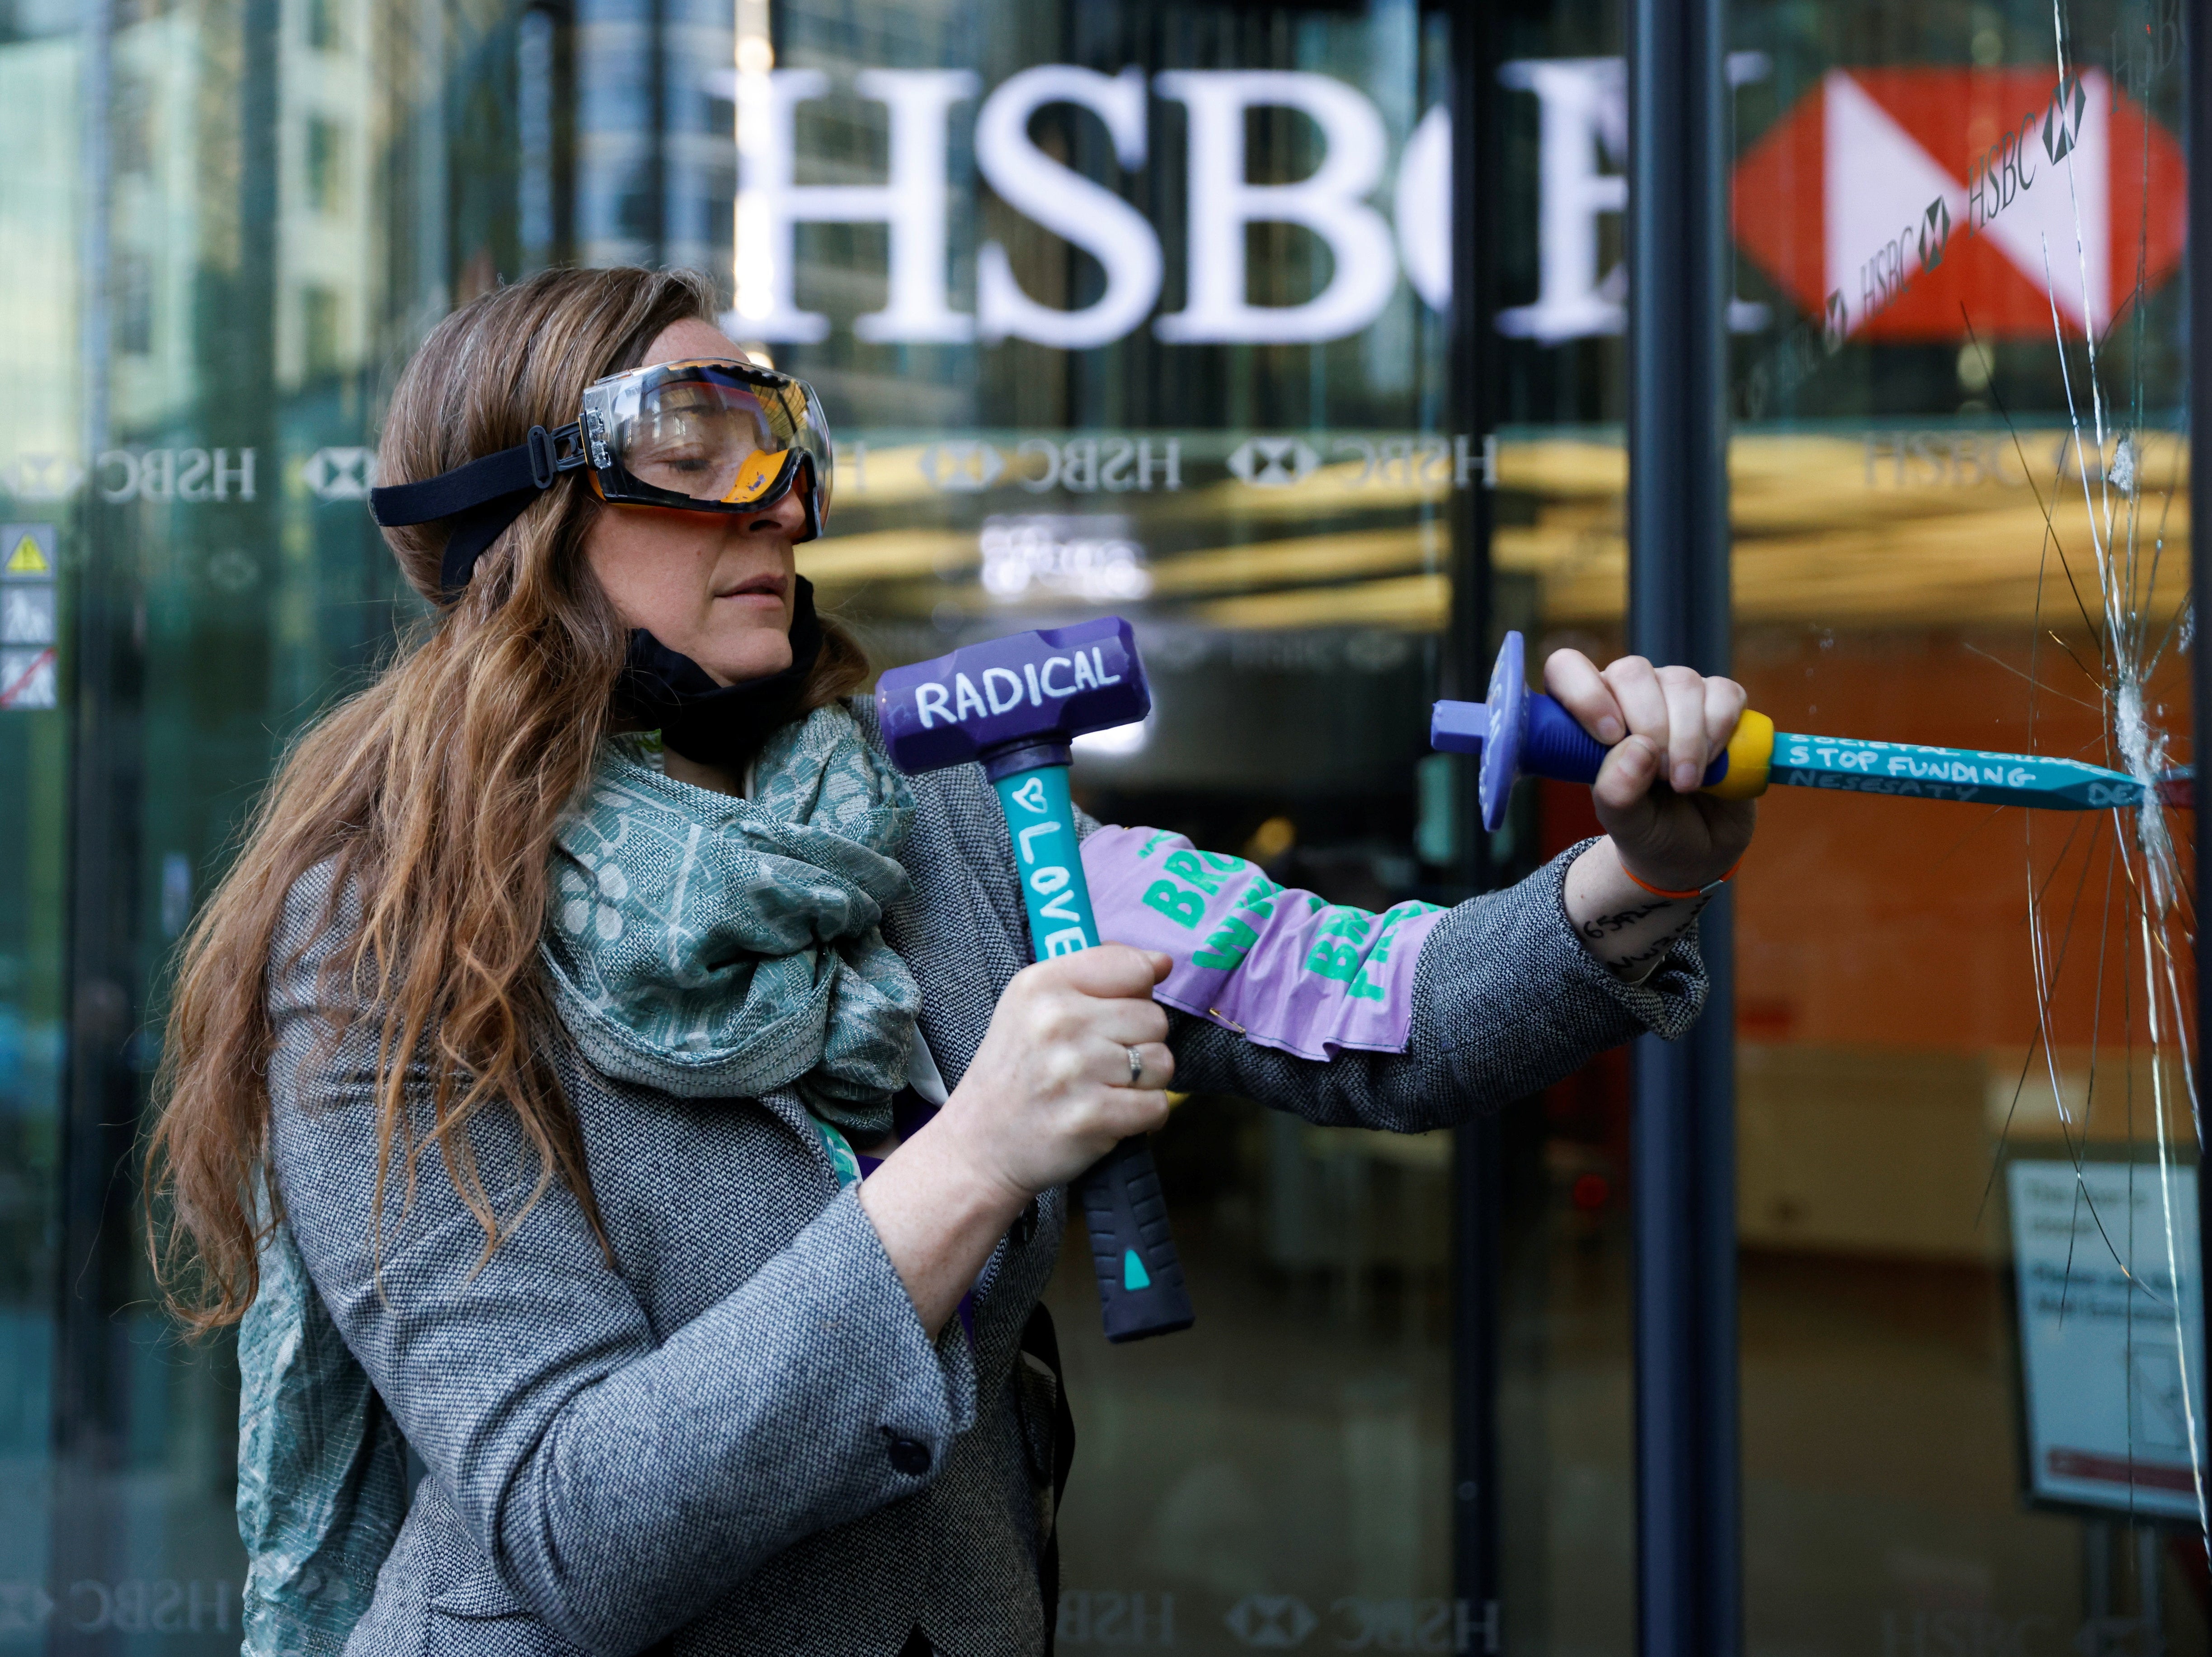 An extinction rebellion protester at HSBC